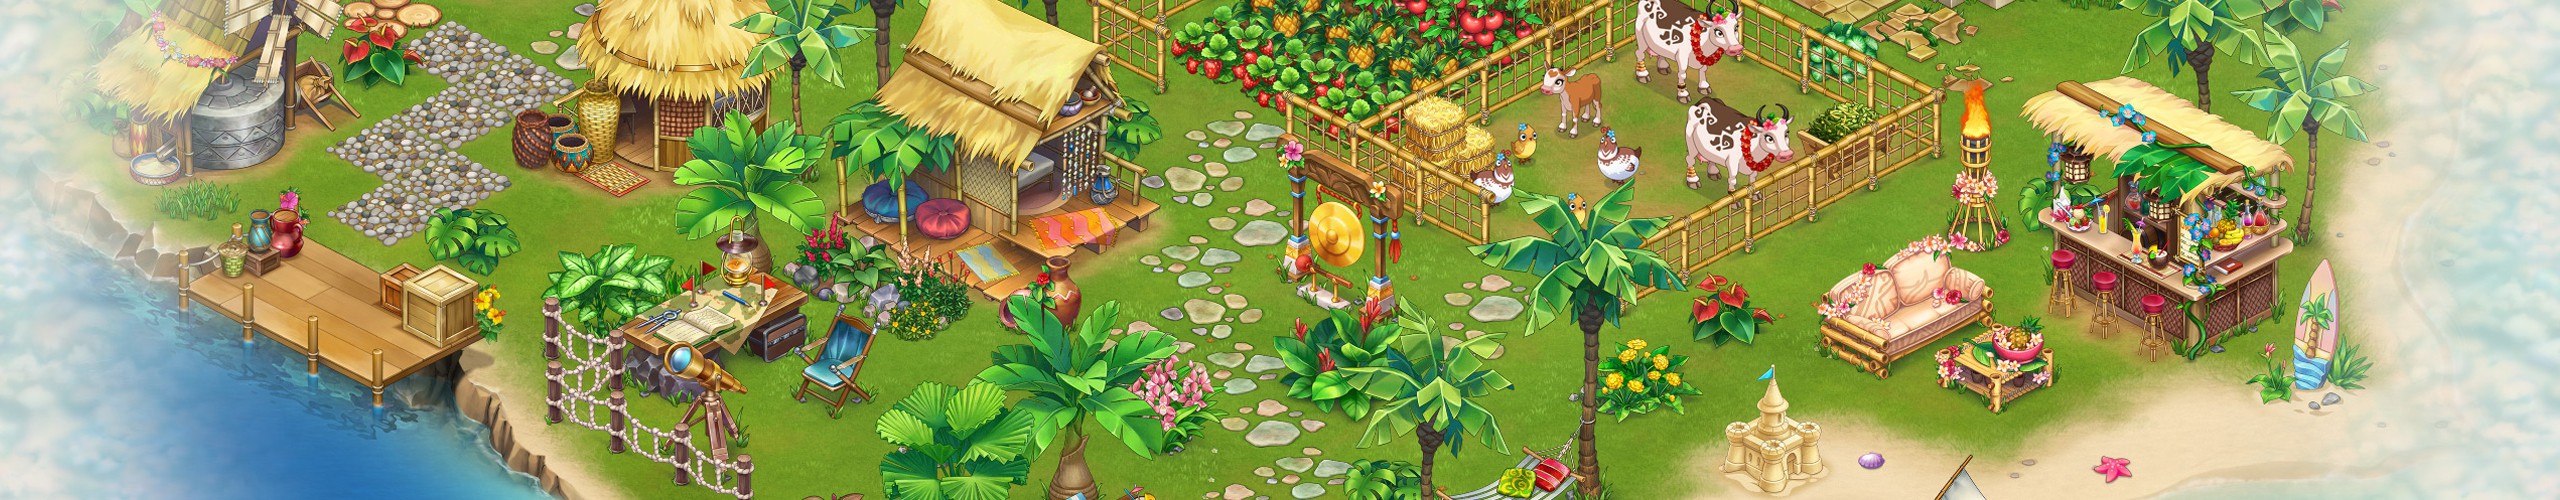 Spiele Taonga: the Island Farm, beende Quests und erhalte Prämien😃
